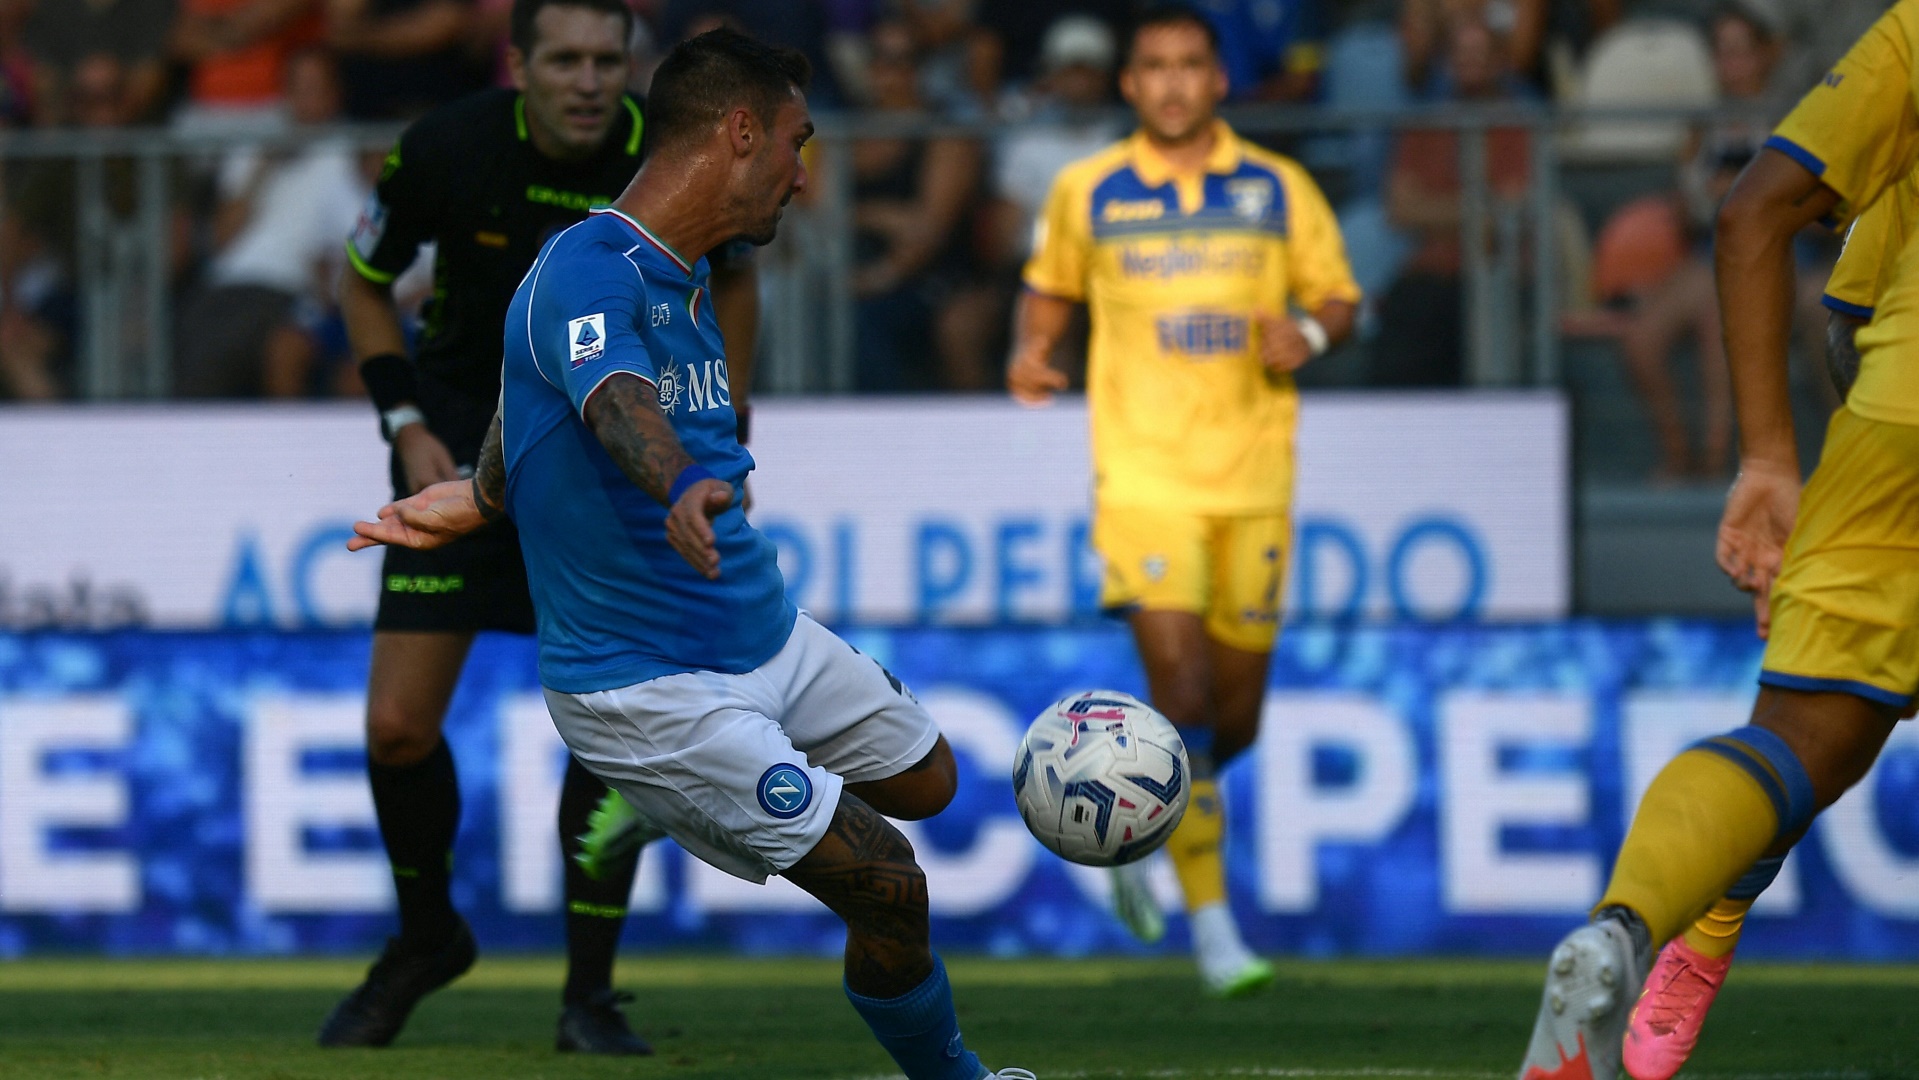 Napoli besiegt Frosinone Calcio mit 3:1